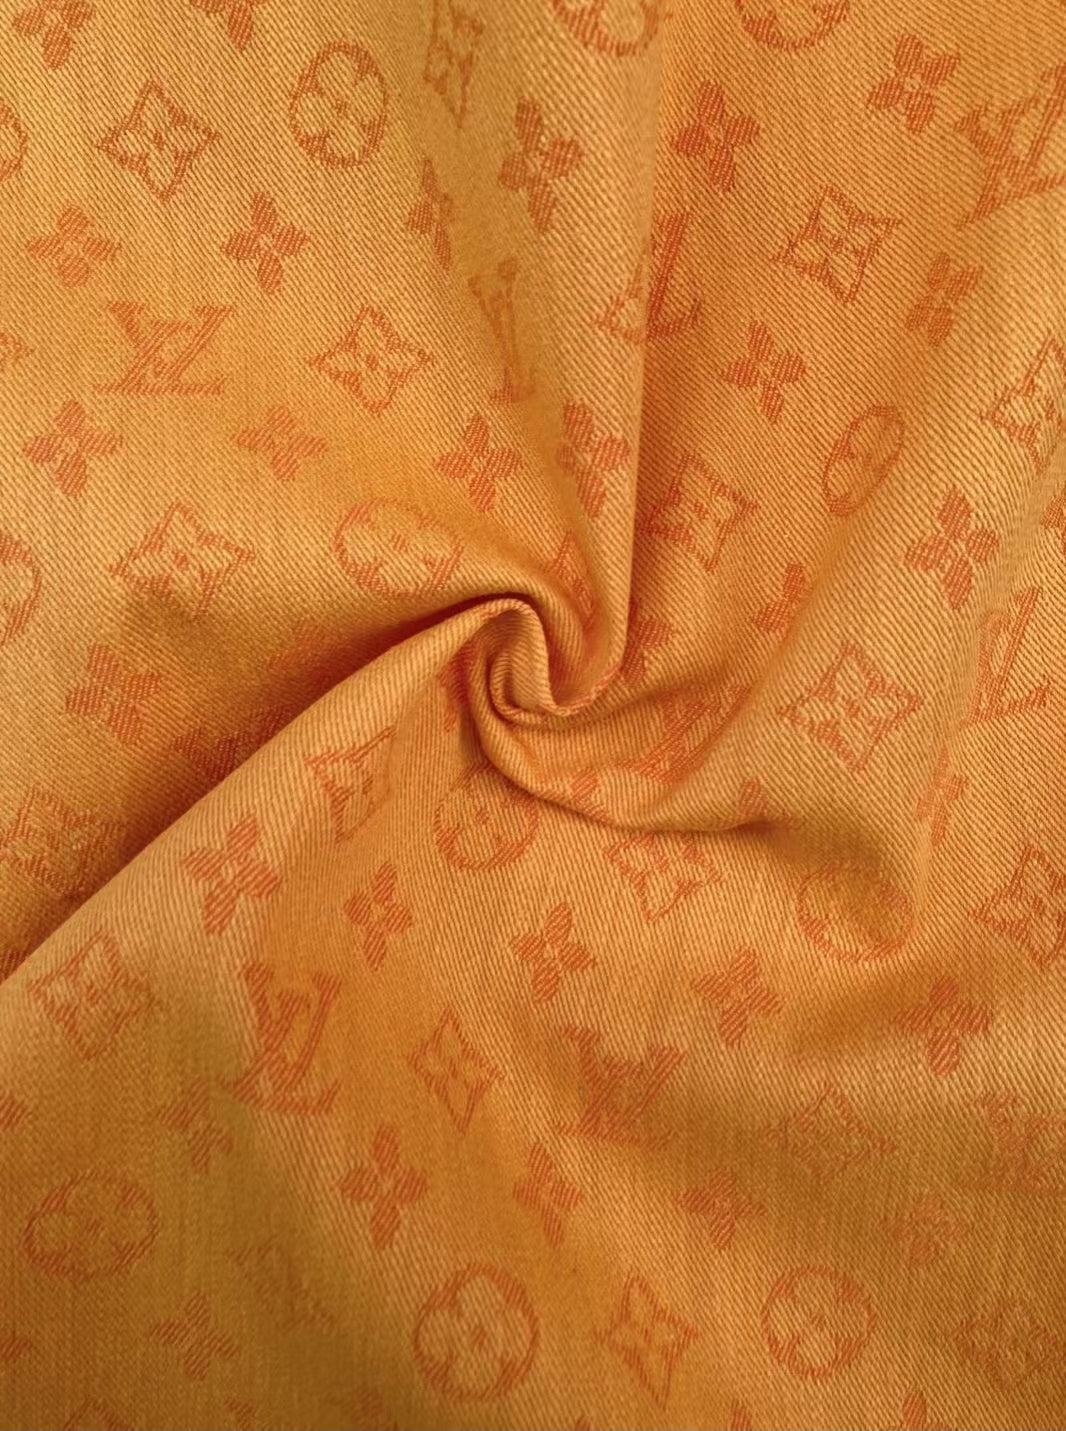 Orange Denim Jeans LV Fabric for Handmade Custom Clothing